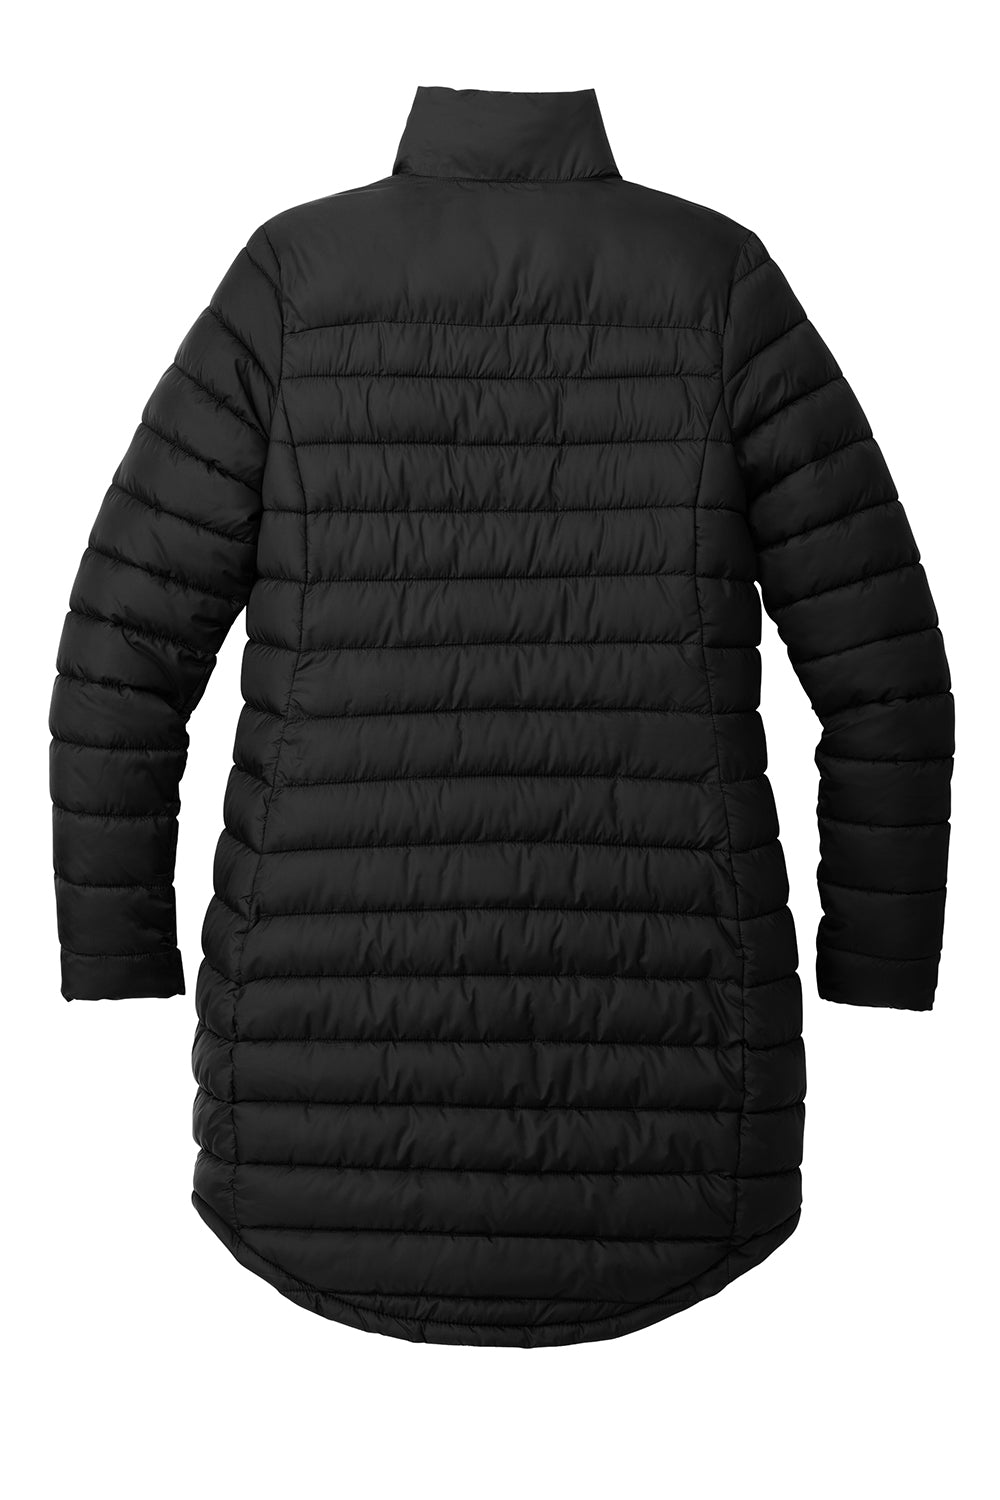 Port Authority L365 Womens Horizon Full Zip Long Puffy Jacket Deep Black Flat Back